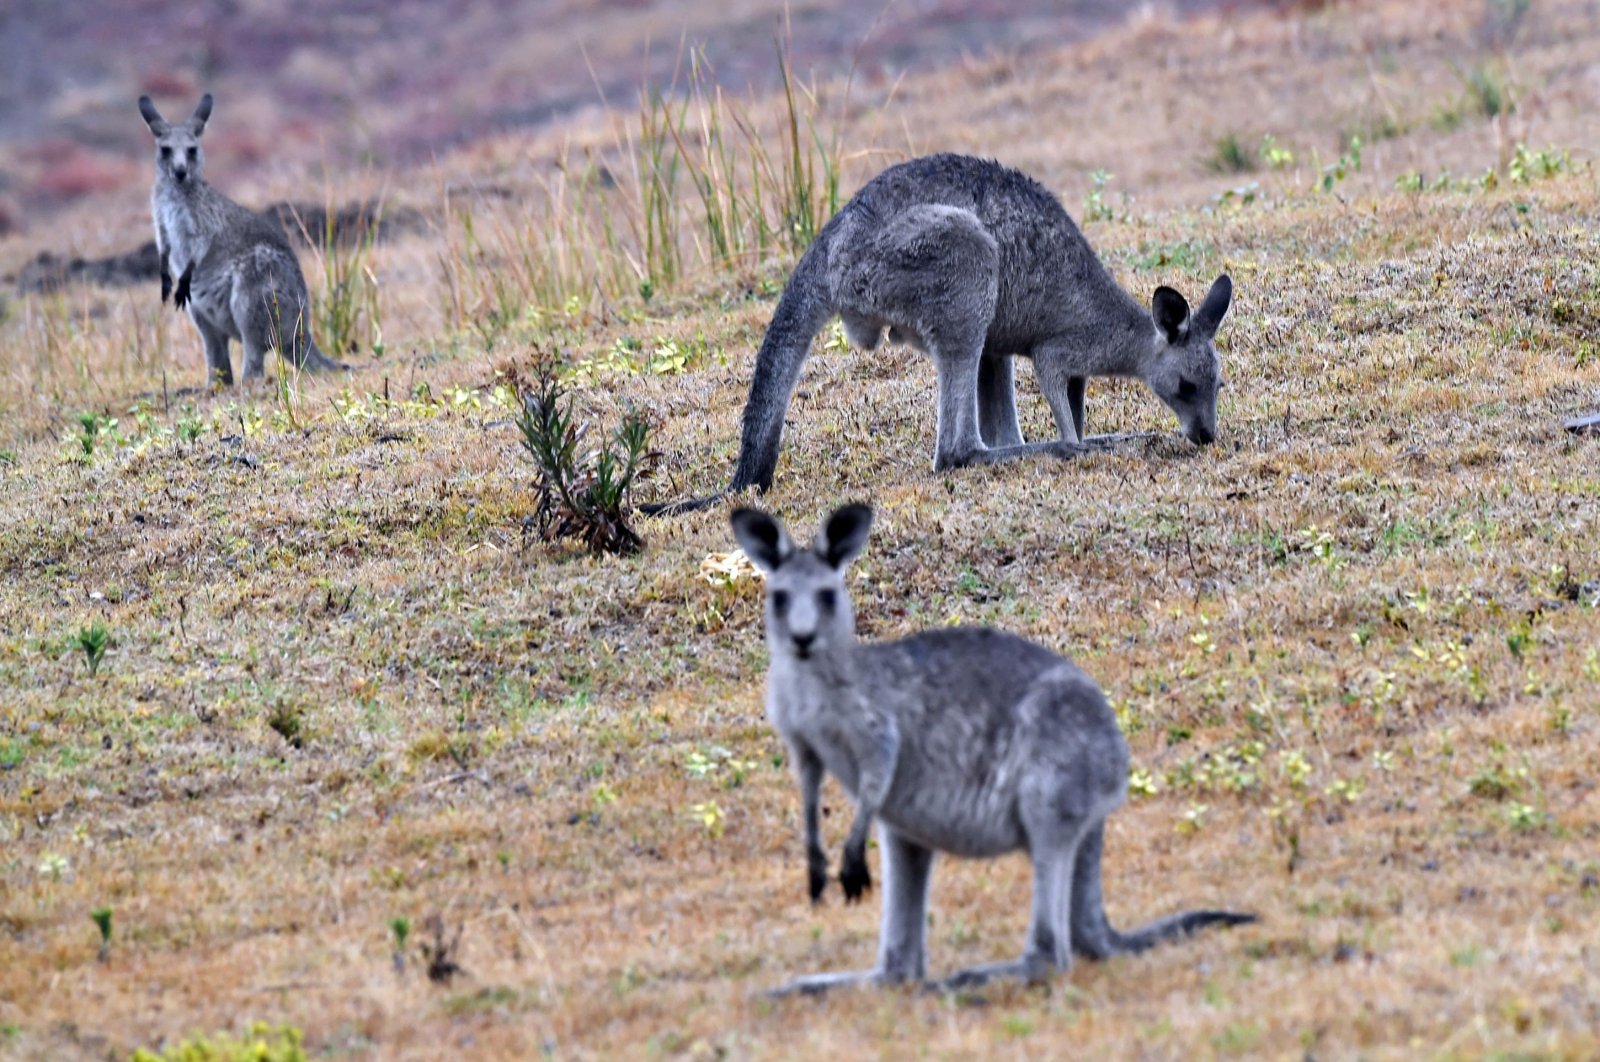 Mercy kill: Australia harus menembak kanguru untuk mencegah kelaparan